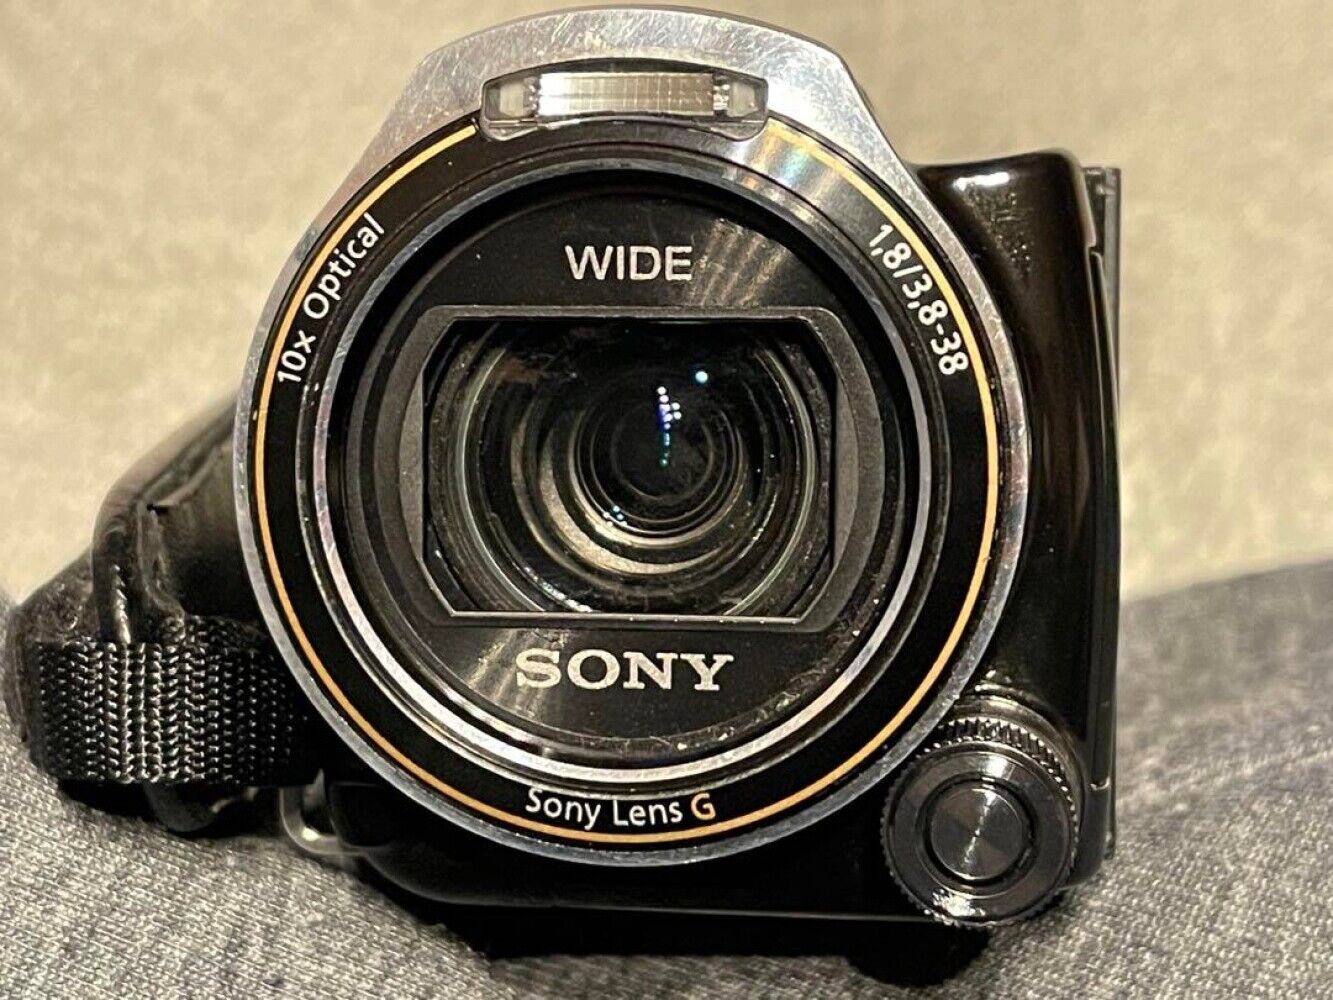 SONY Handycam HDR-CX560V Digital Video Camera Black Used japan | eBay